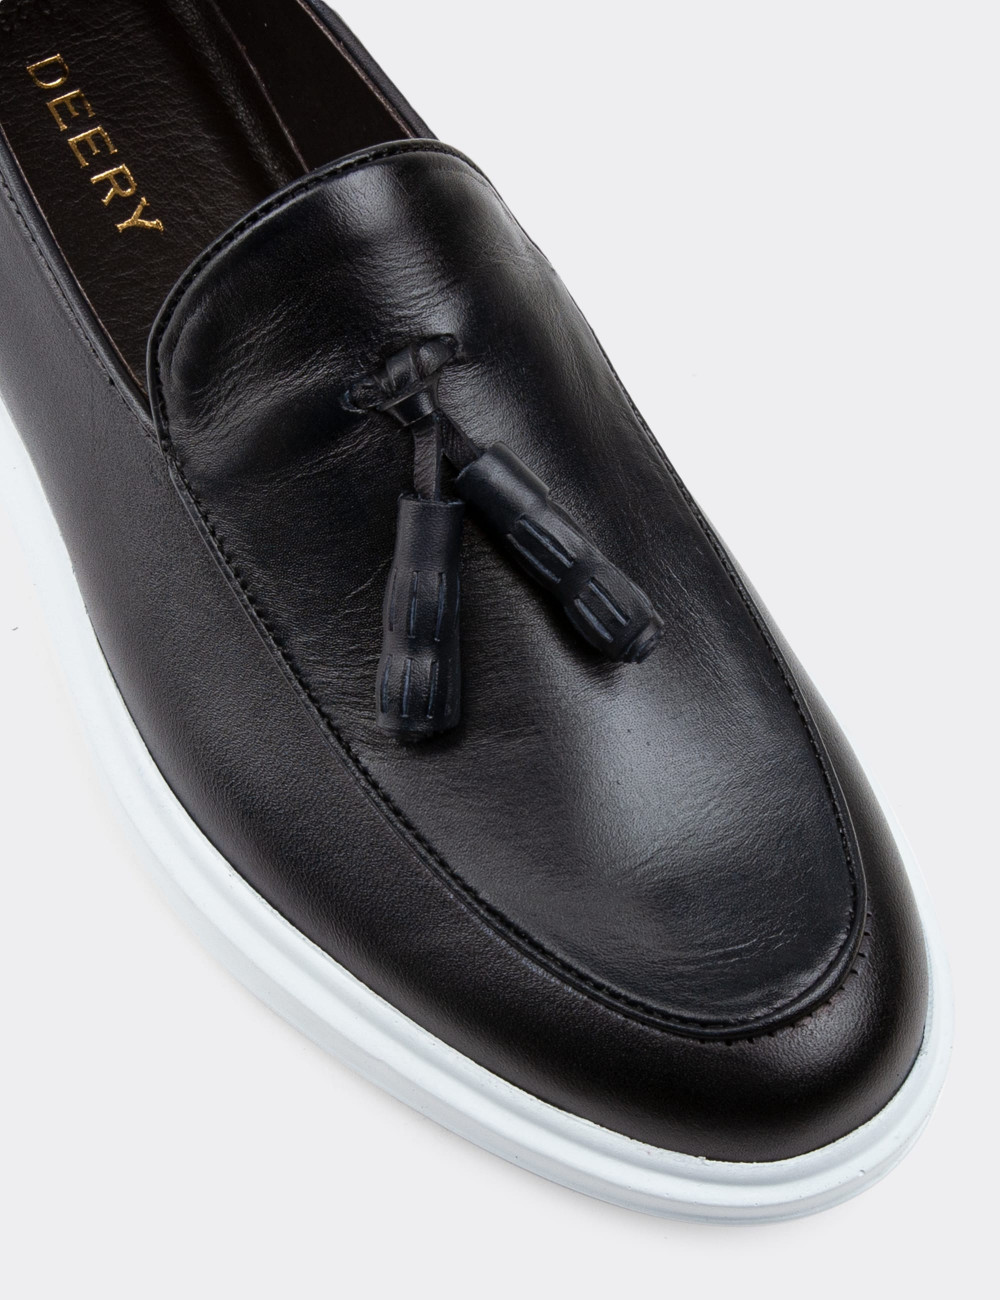 Hakiki Deri Lacivert Comfort Loafer Erkek Ayakkabı - 01840MLCVP01